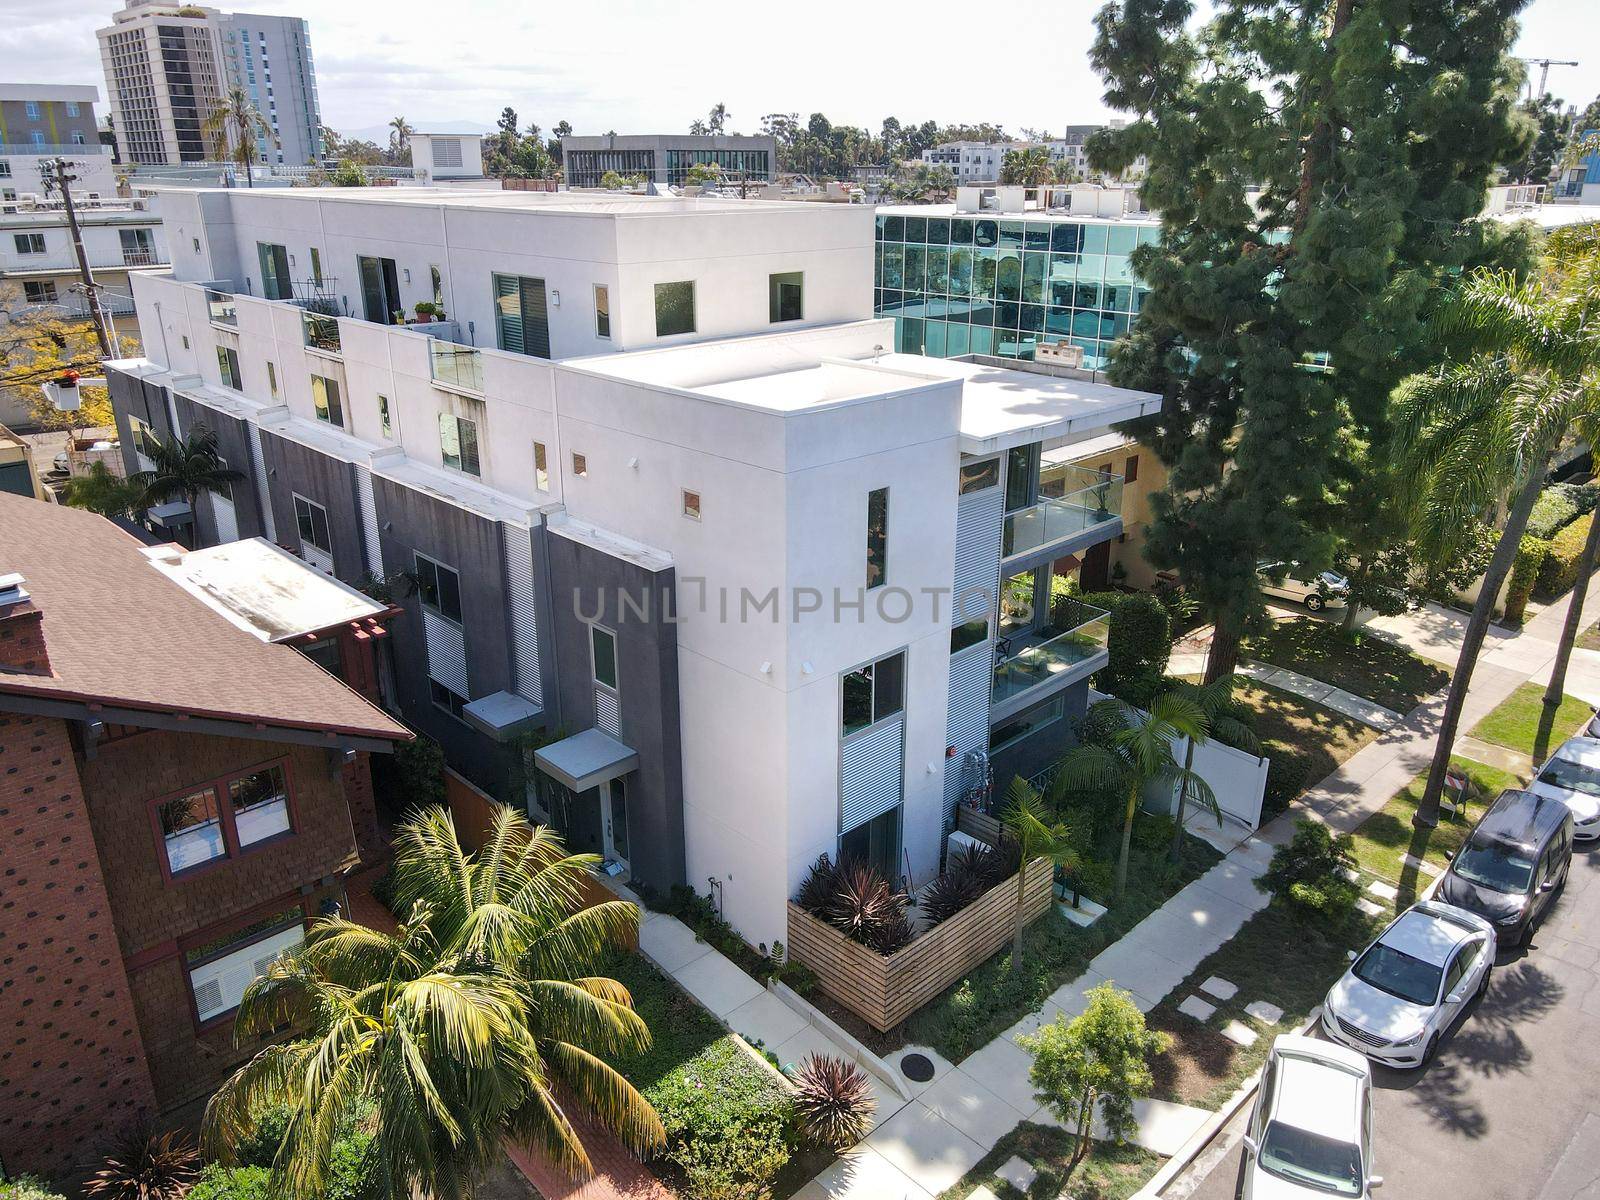 Modern apartment building in Hillcrest neighborhood in San Diego, by Bonandbon